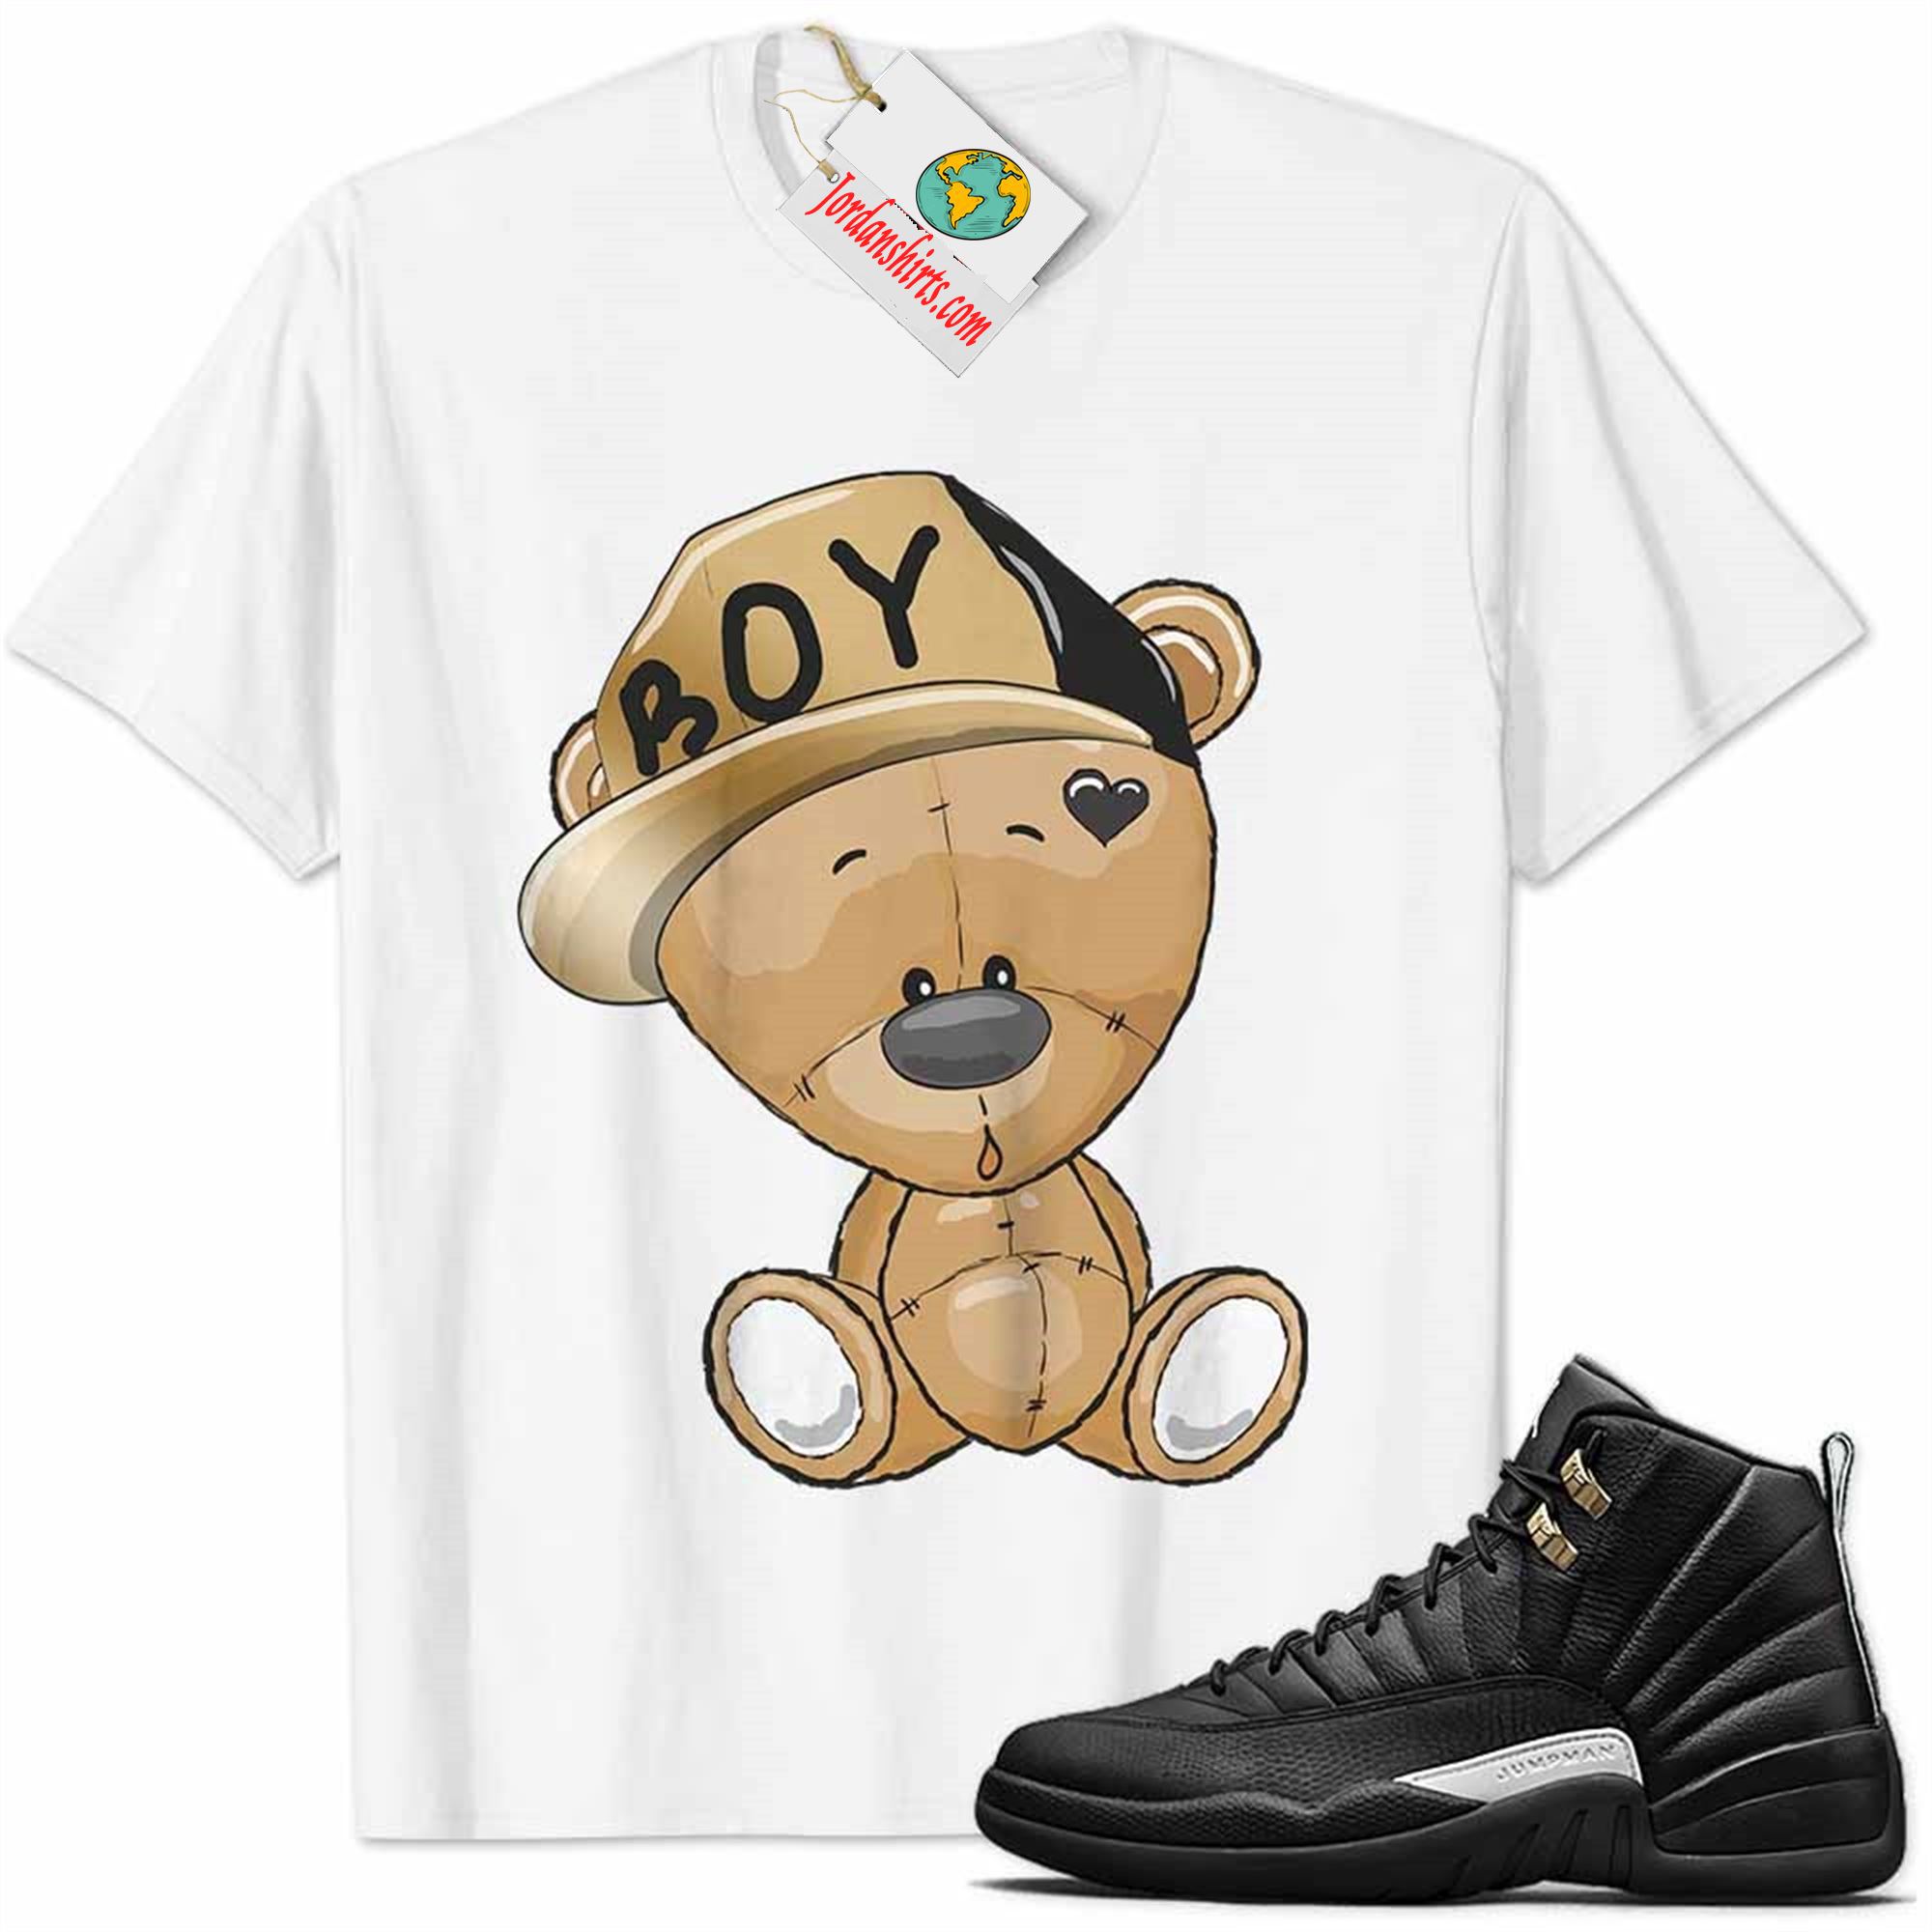 Jordan 12 Shirt, Jordan 12 Master Shirt Cute Baby Teddy Bear White Plus Size Up To 5xl